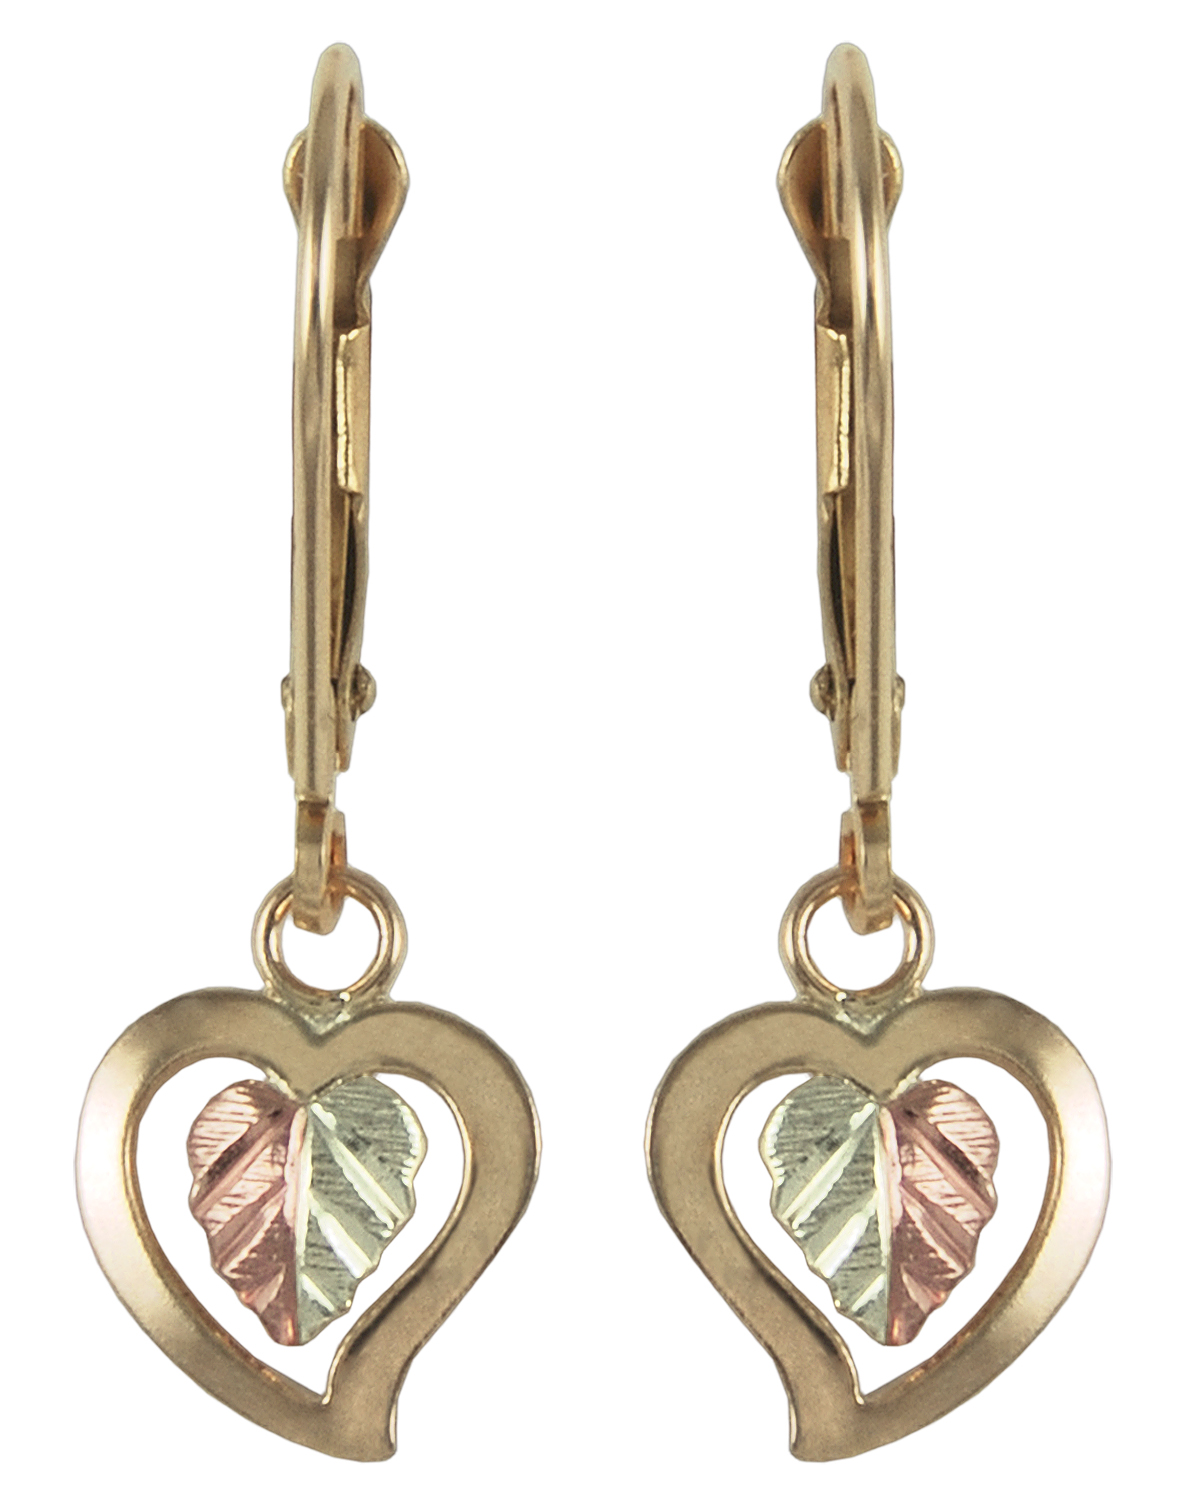 Heart shaped Earrings, Black Hills Gold motif, 10kyg. 